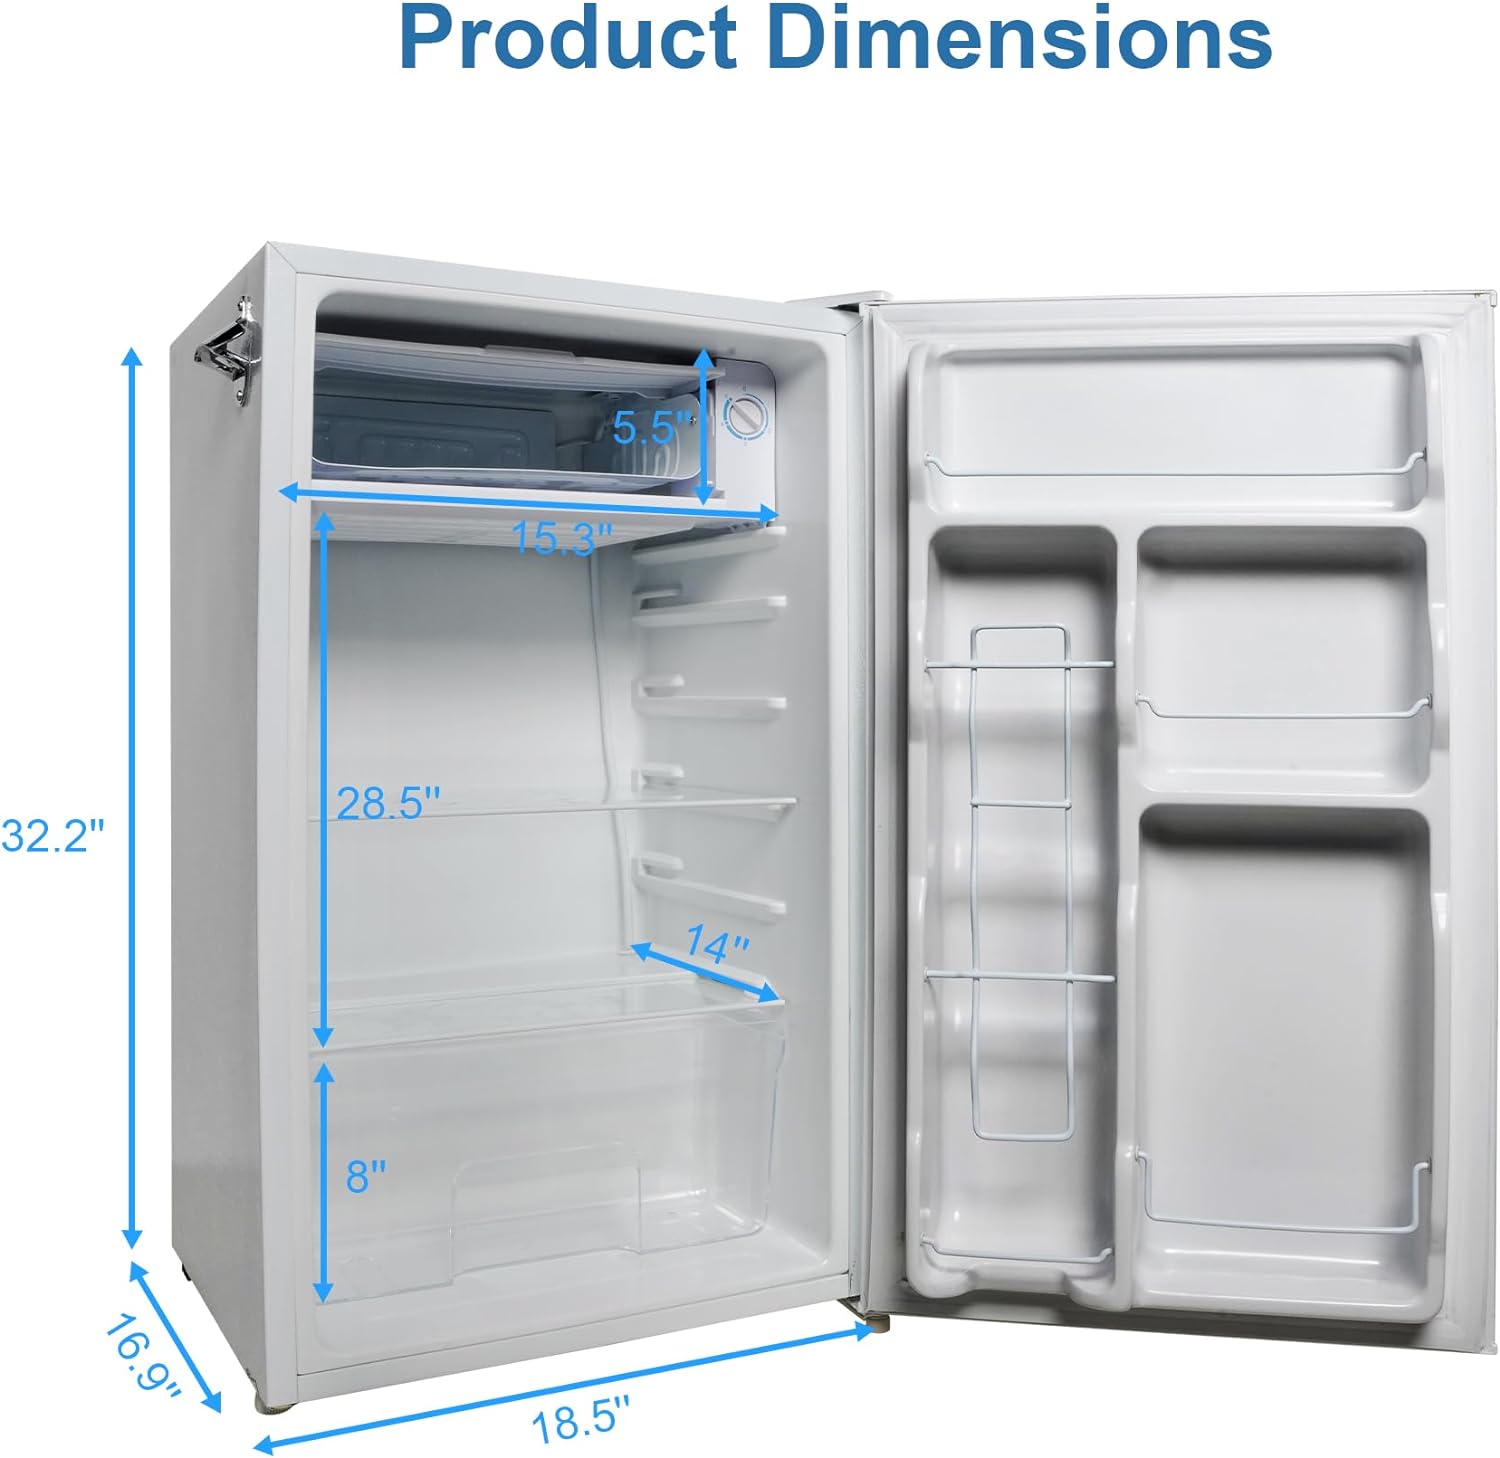 E-Macht 3.2 Cu.Ft Mini Fridge with Freezer, Compact Refrigerator,  Adjustable Thermostat Control, Adjustable Legs,White Mini Fridge for